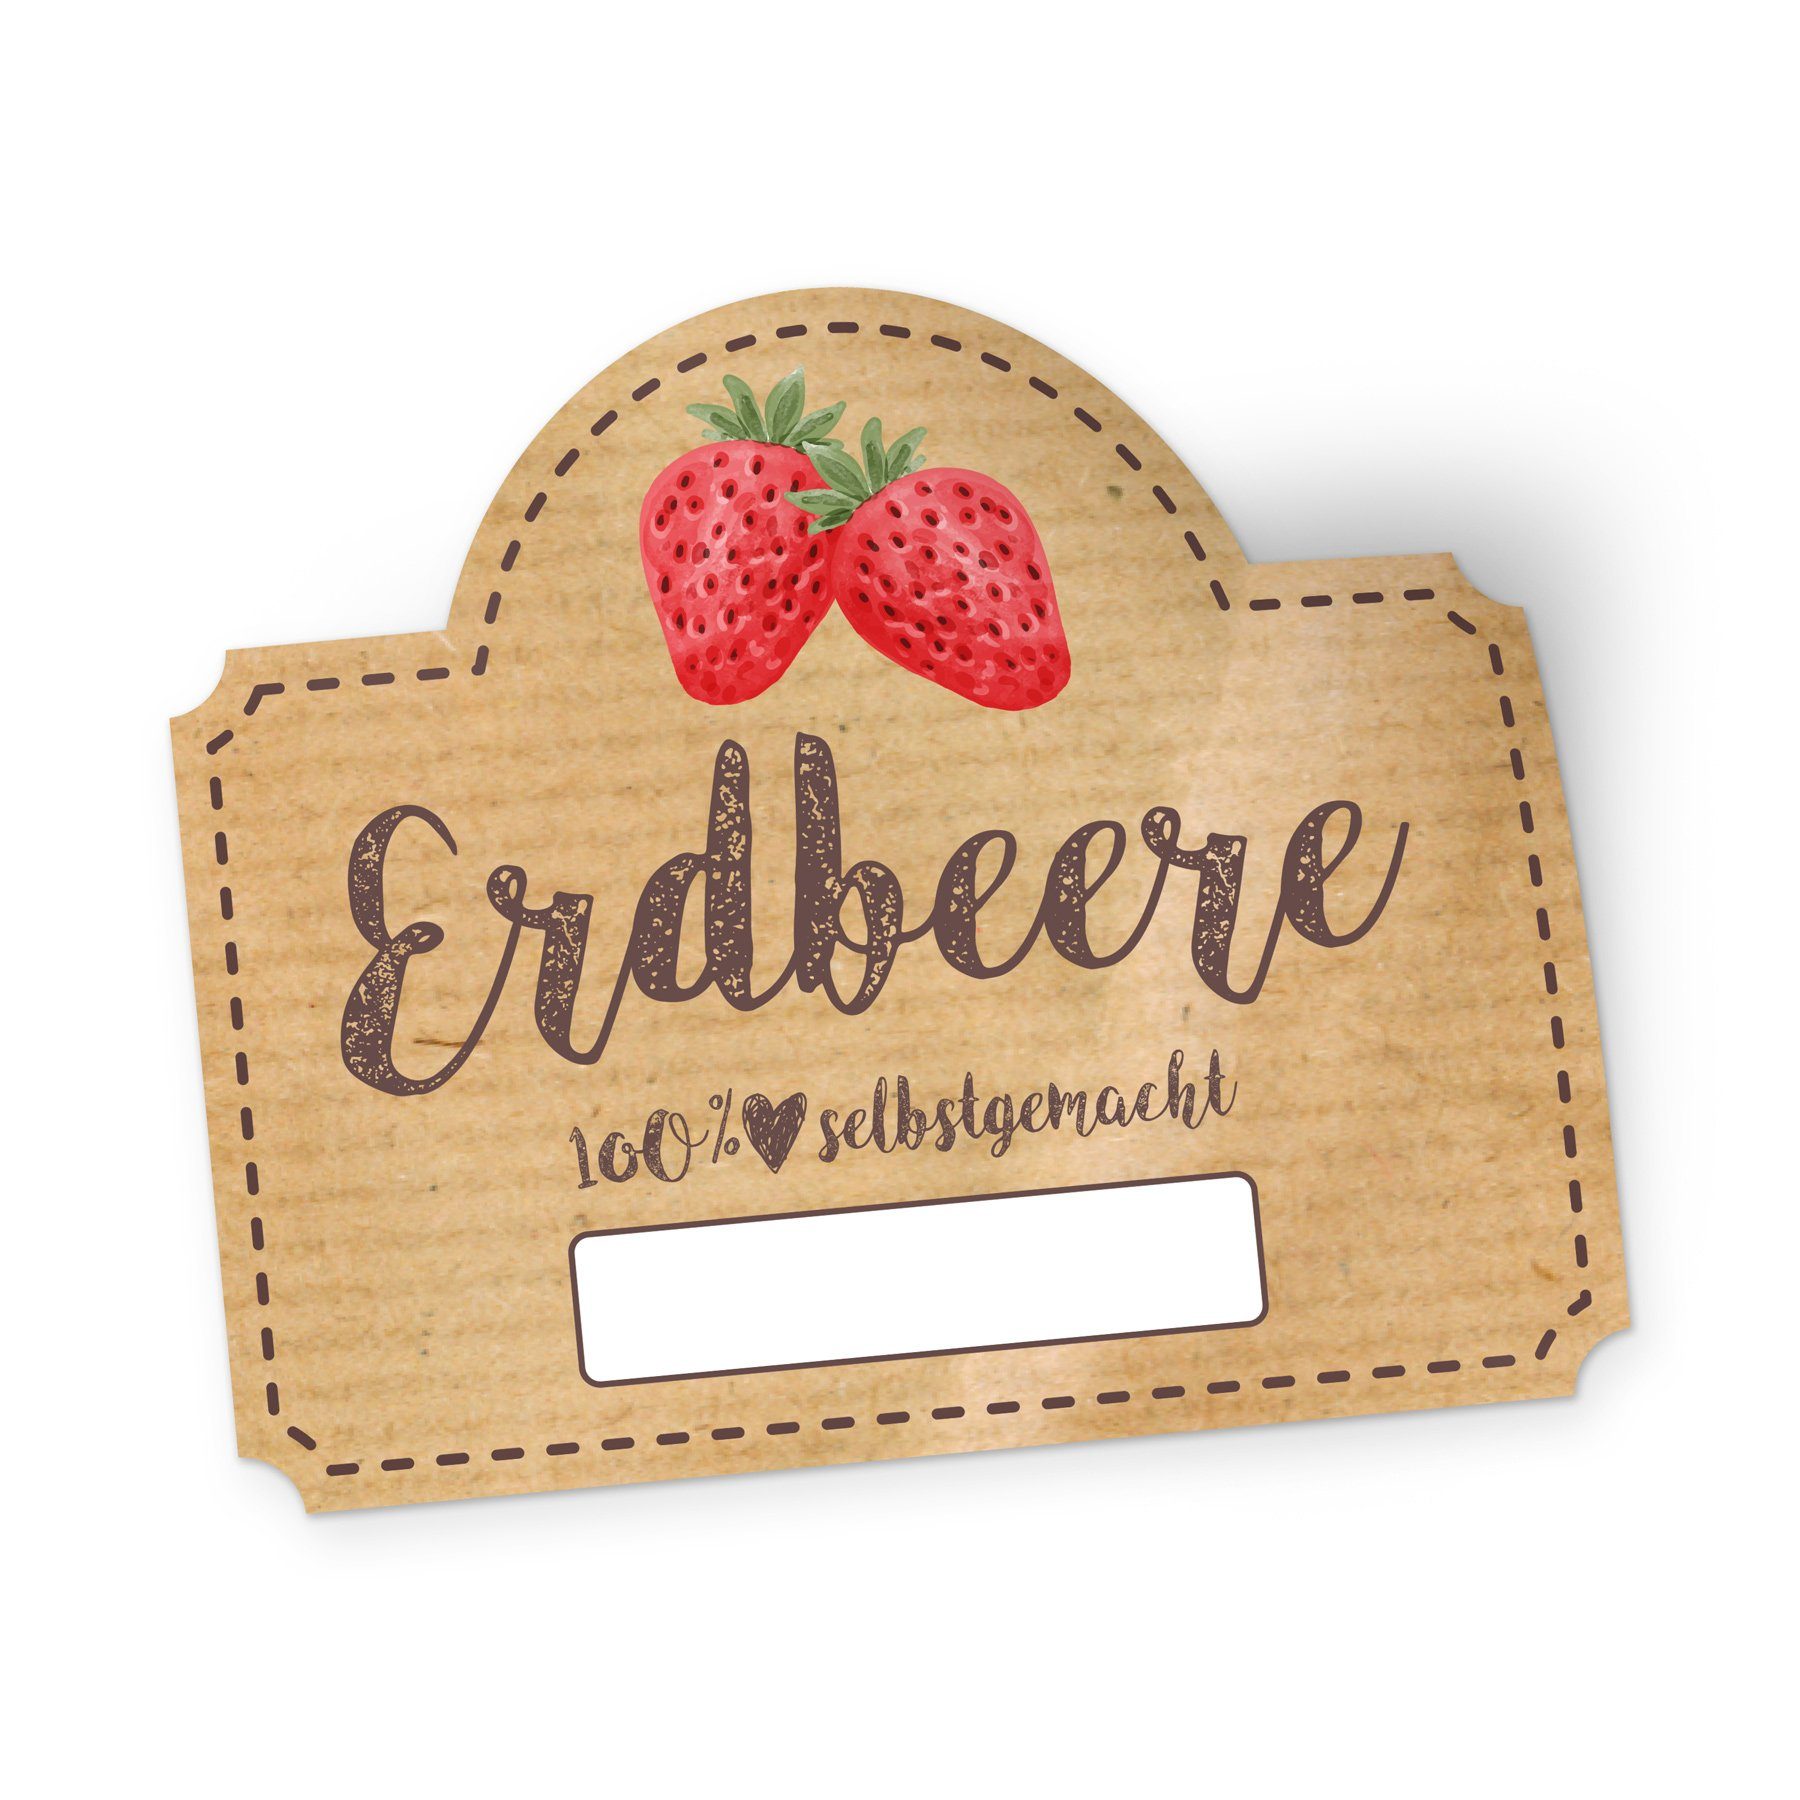 itenga Aufkleber itenga 50 x Marmeladen Etikett Erdbeer 4,5x3,8cm 100% selbstgemacht St